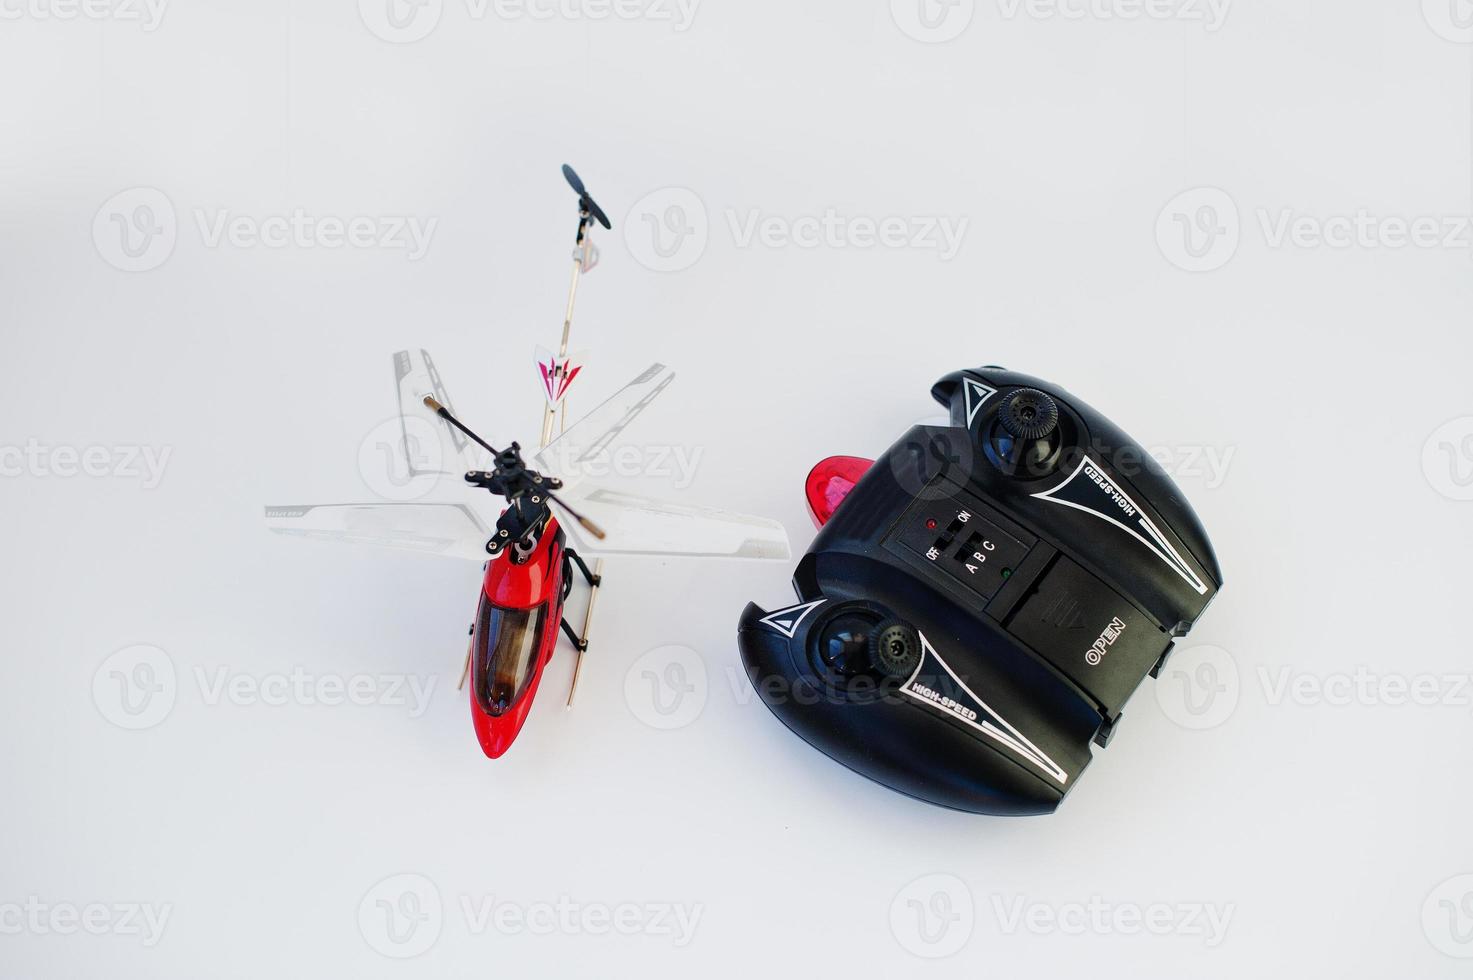 helicóptero vermelho de controle remoto isolado no fundo branco. foto